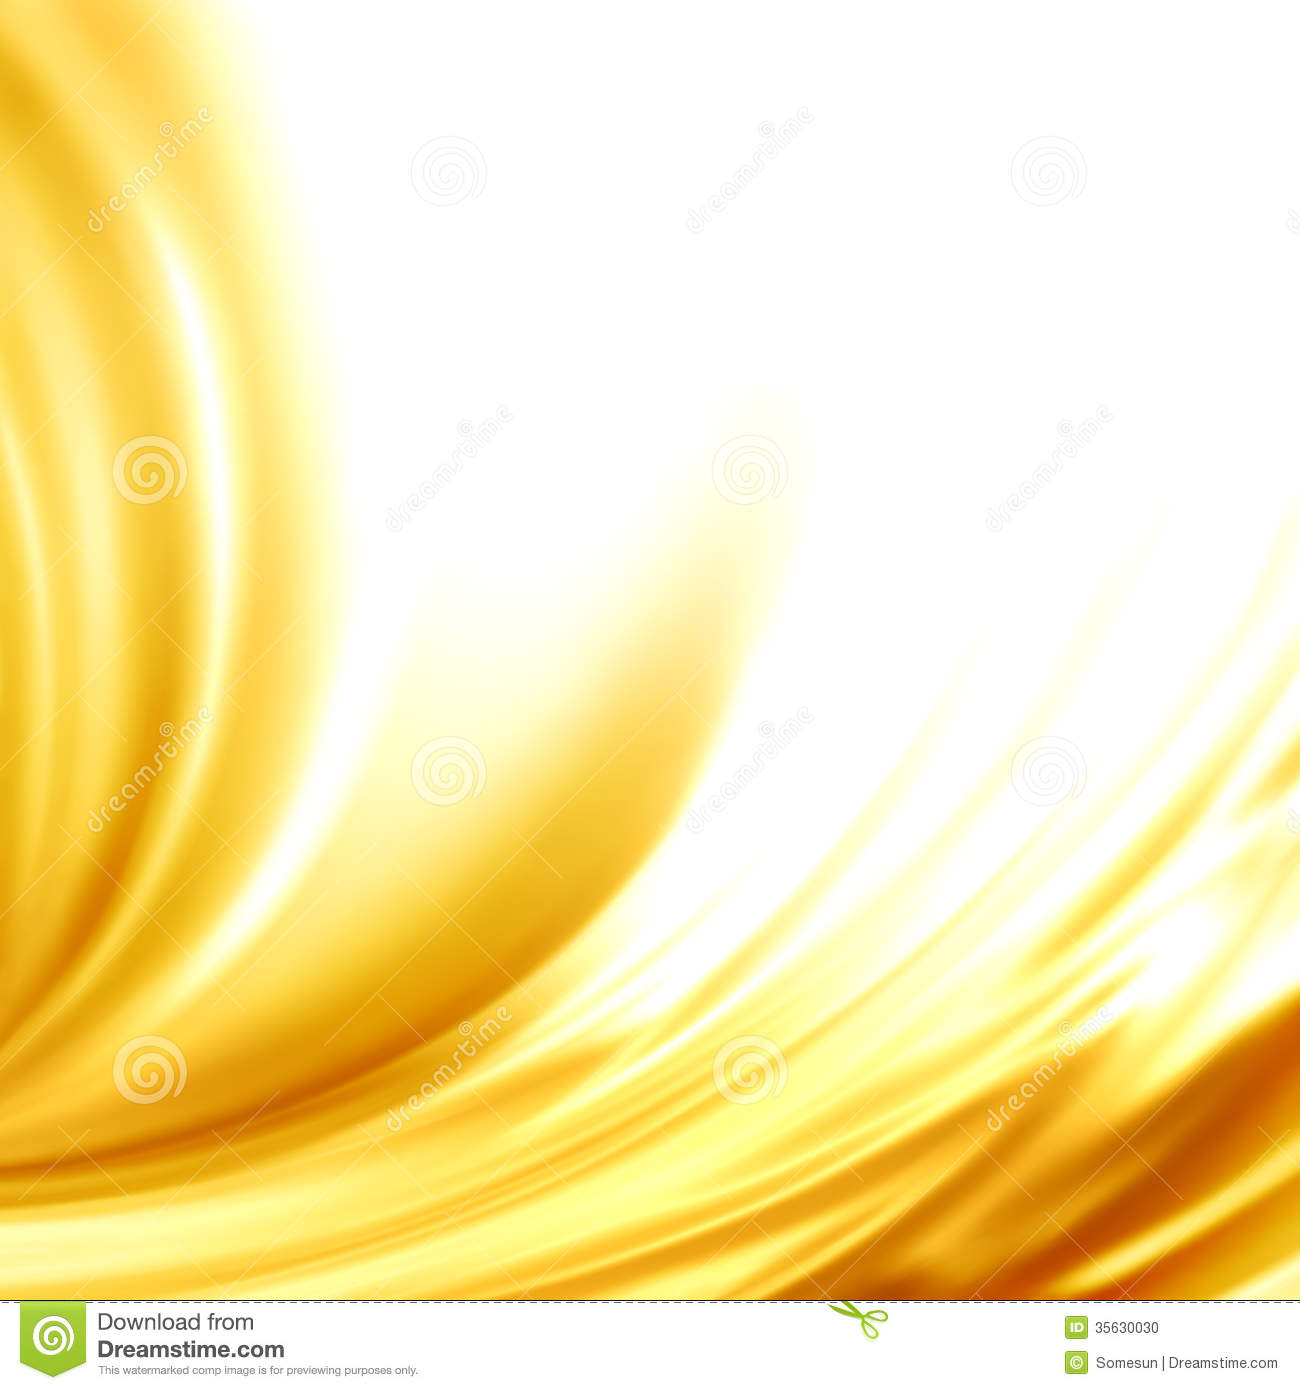 Gold Swirl Design Image Vector